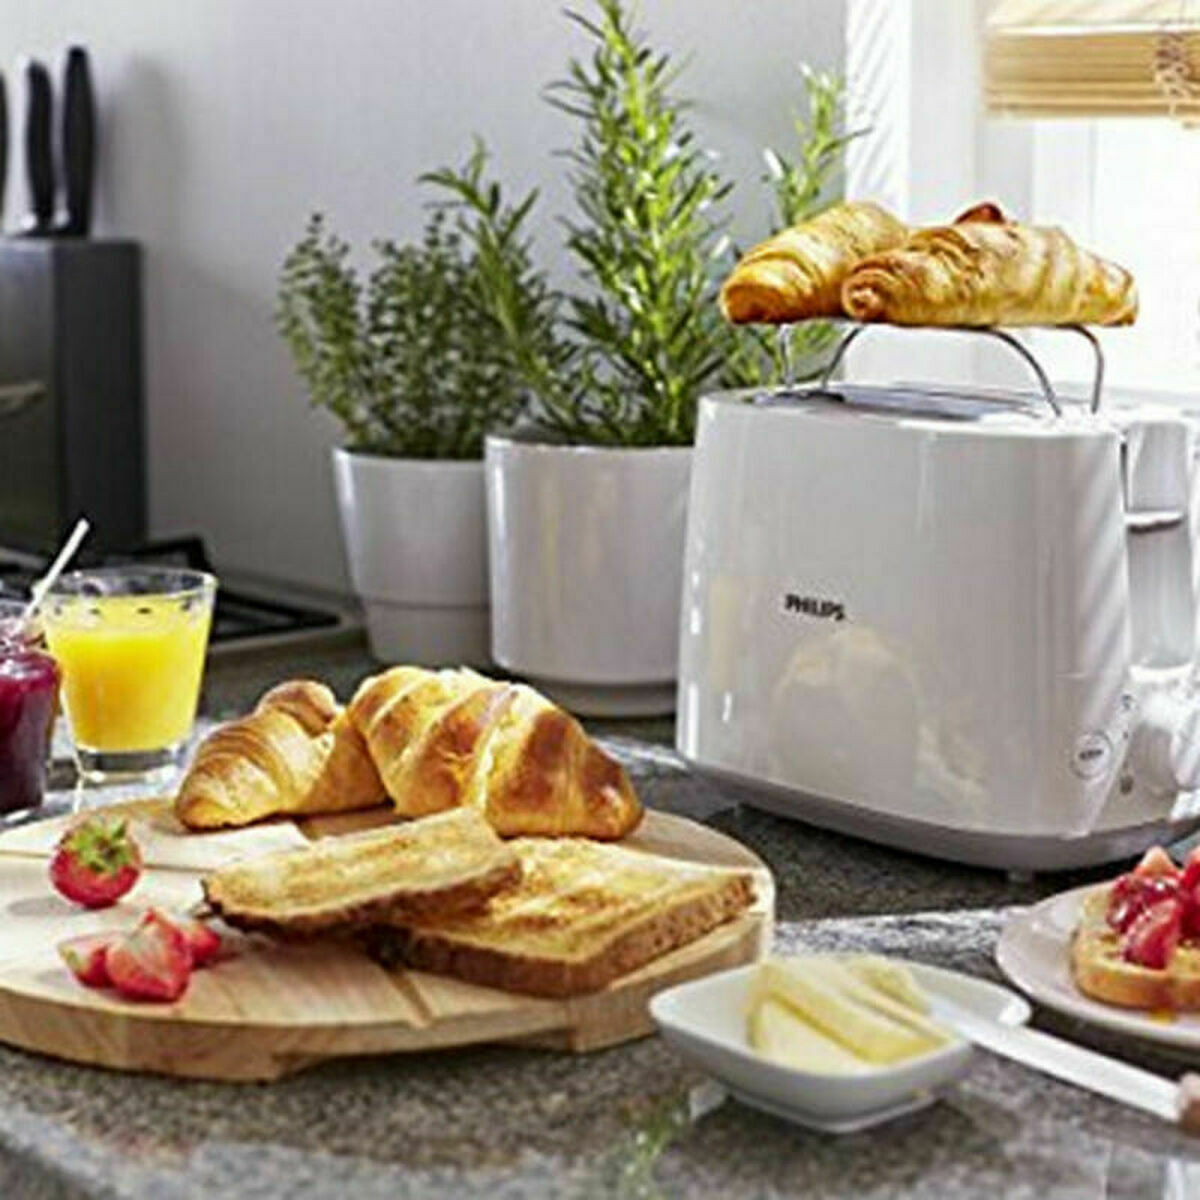 Toaster Philips Tostadora HD2581/00 2x 850 W